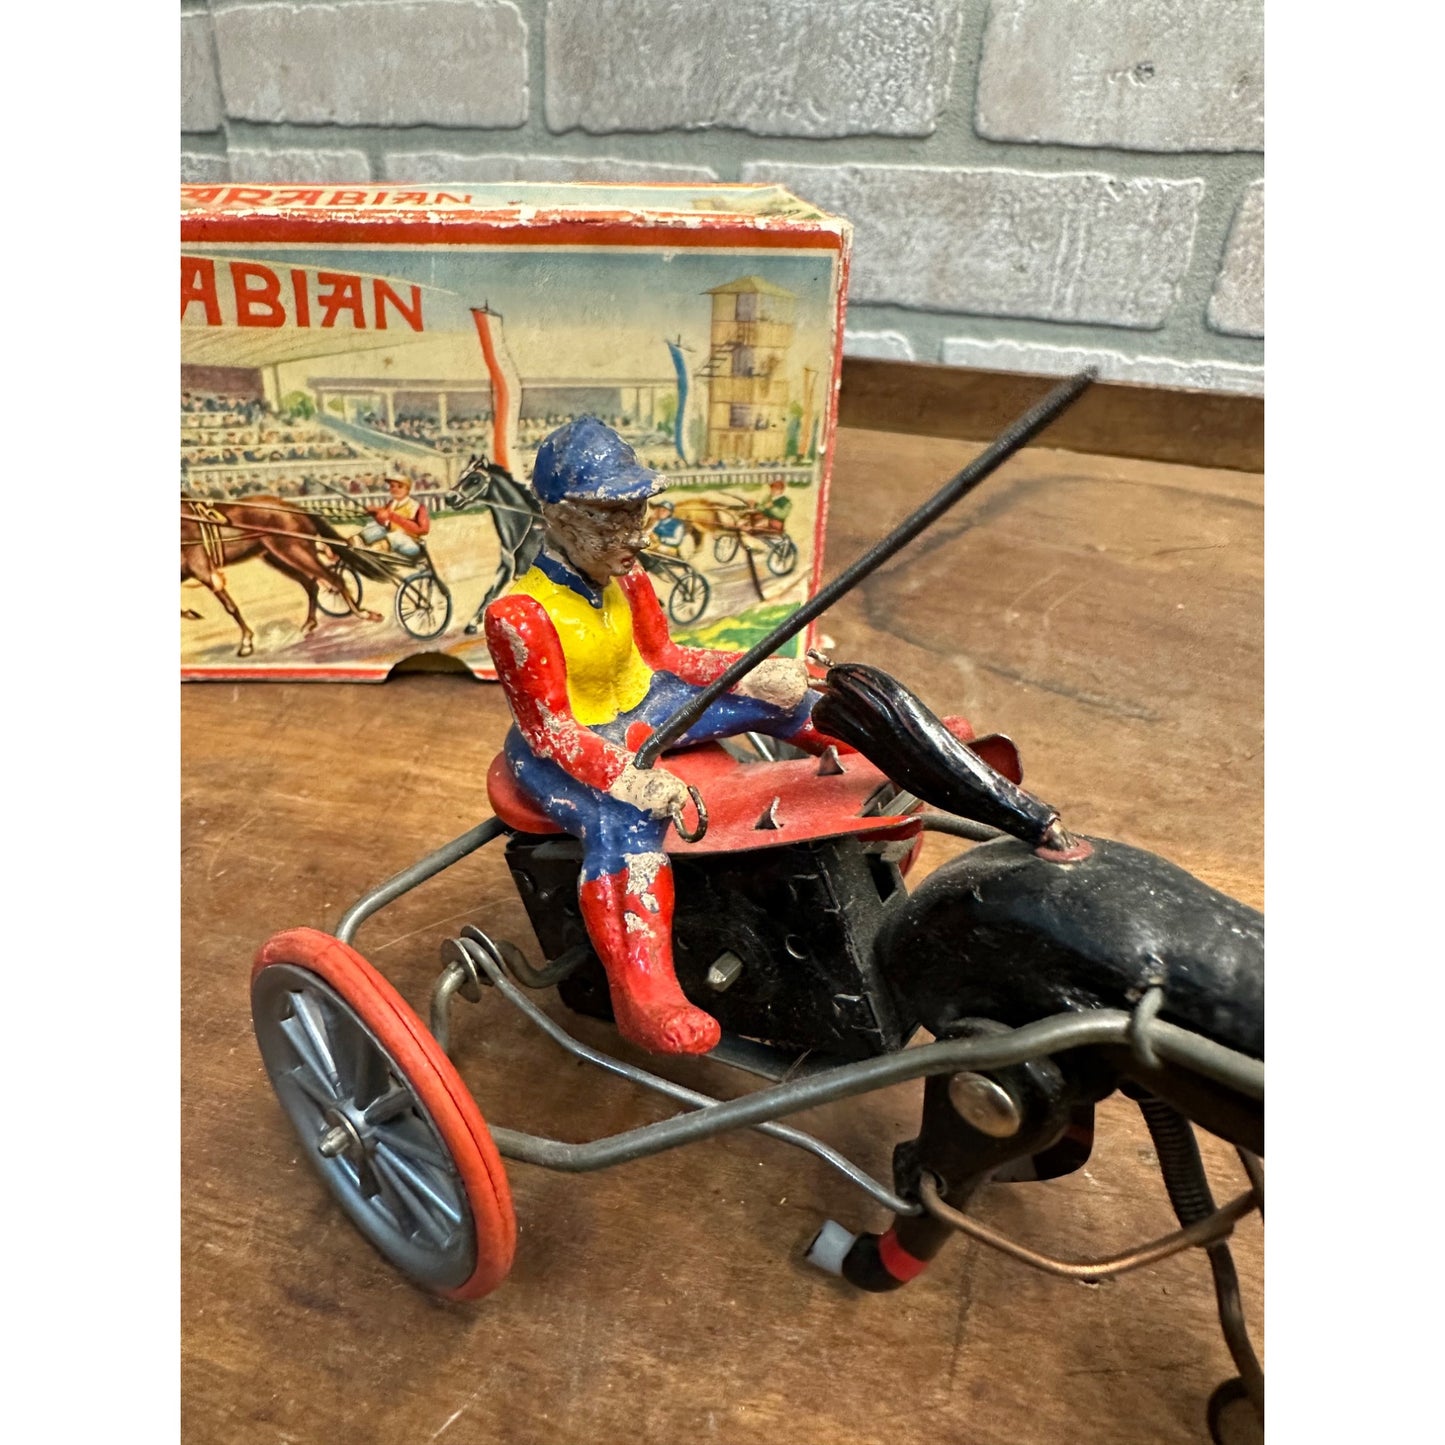 Vintage 1950s Arabian Racing Horse Windup Toy DGM West Germany + Box